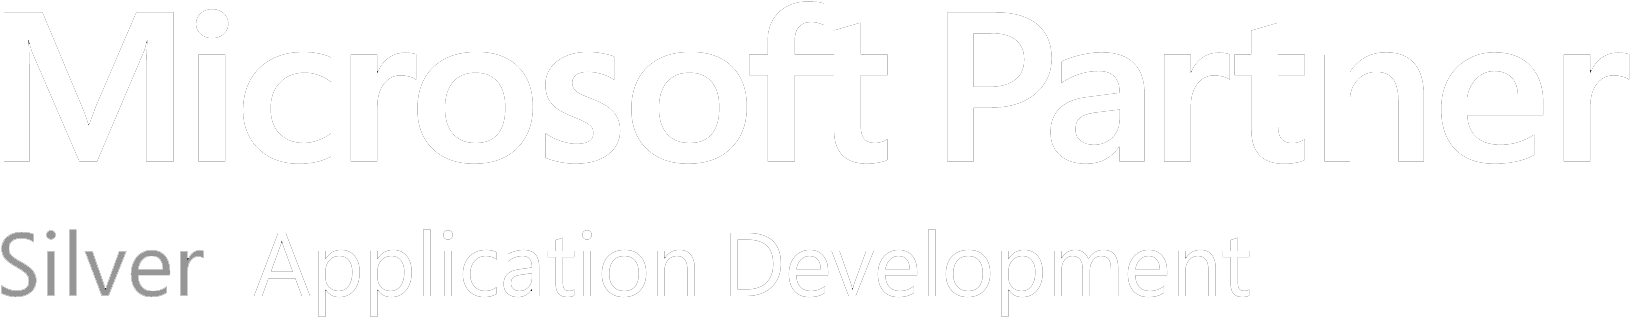 Ms Partner Logo 4 Amanda Clark 2018 02 16t01 - Microsoft Partner Silver Application Development Clipart (1825x513), Png Download